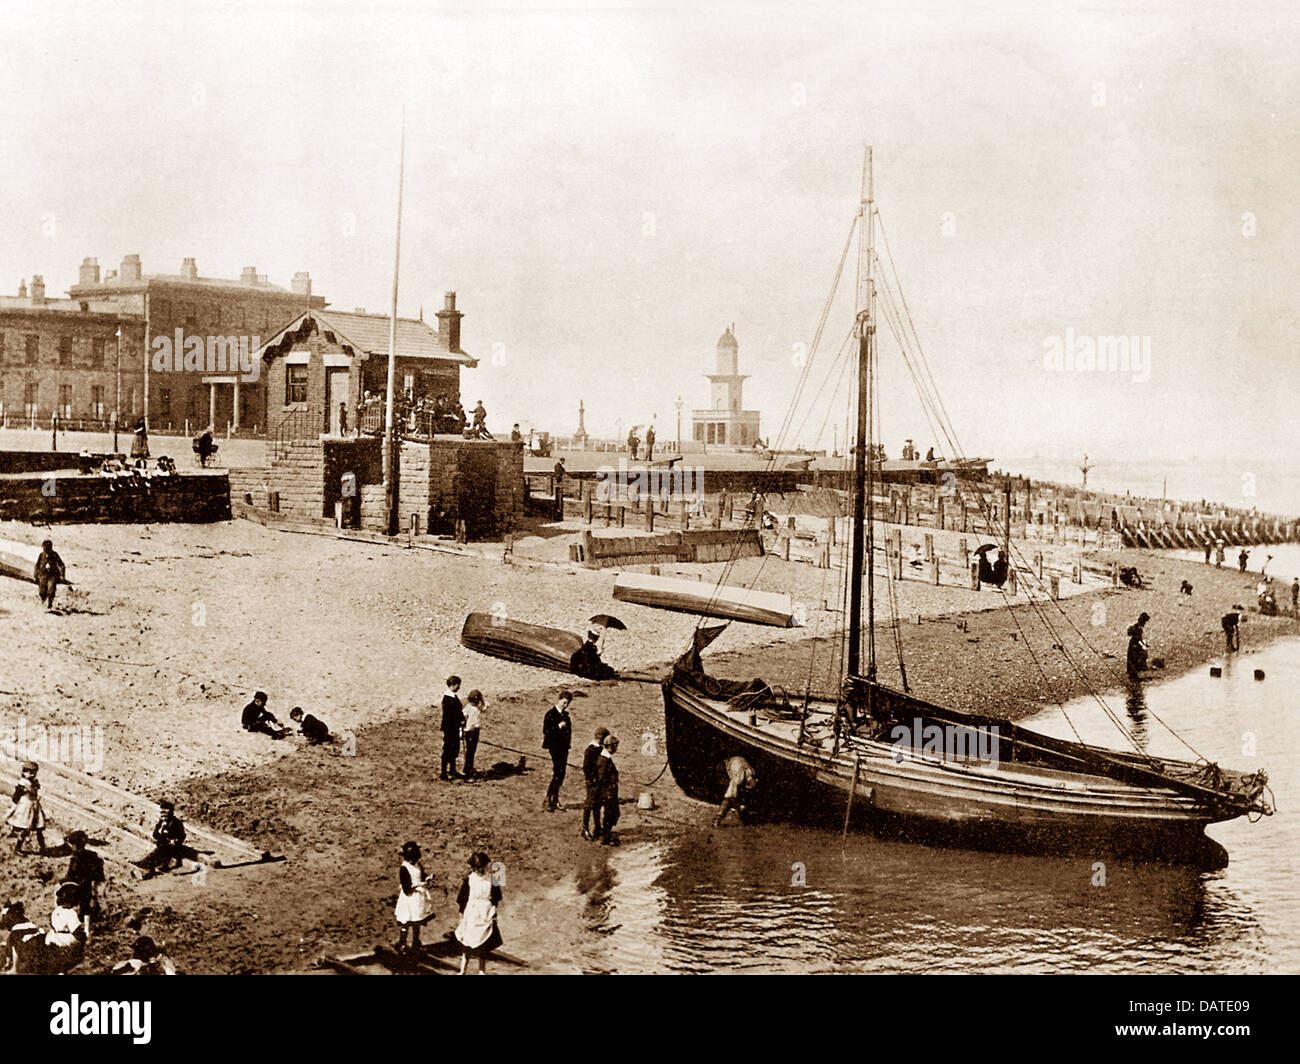 Fleetwood Beach early 1900s Stock Photo - Alamy